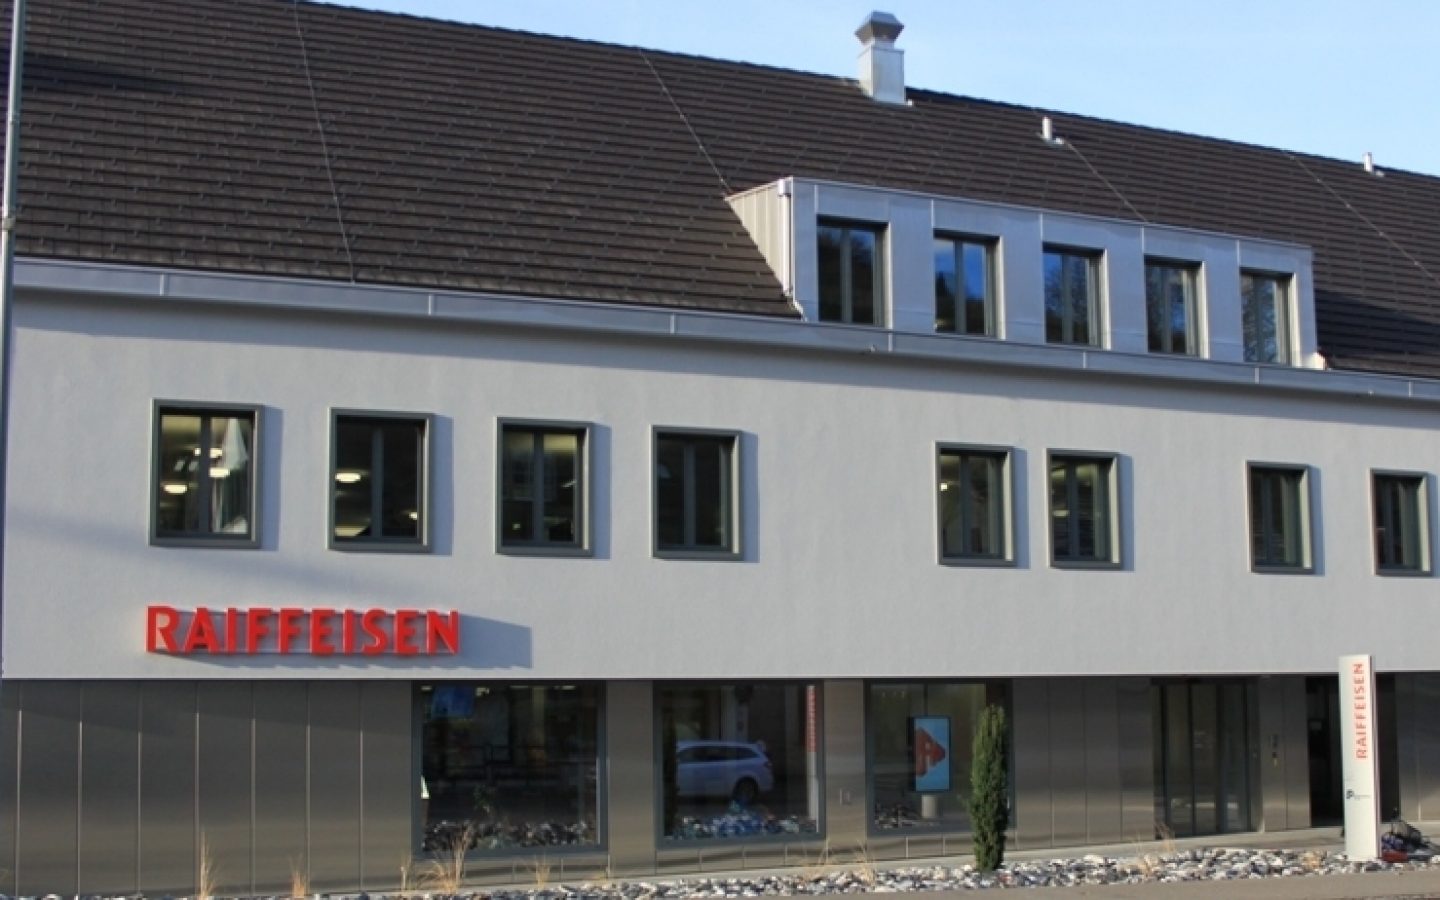 Raiffeisenbank in Turbenthal